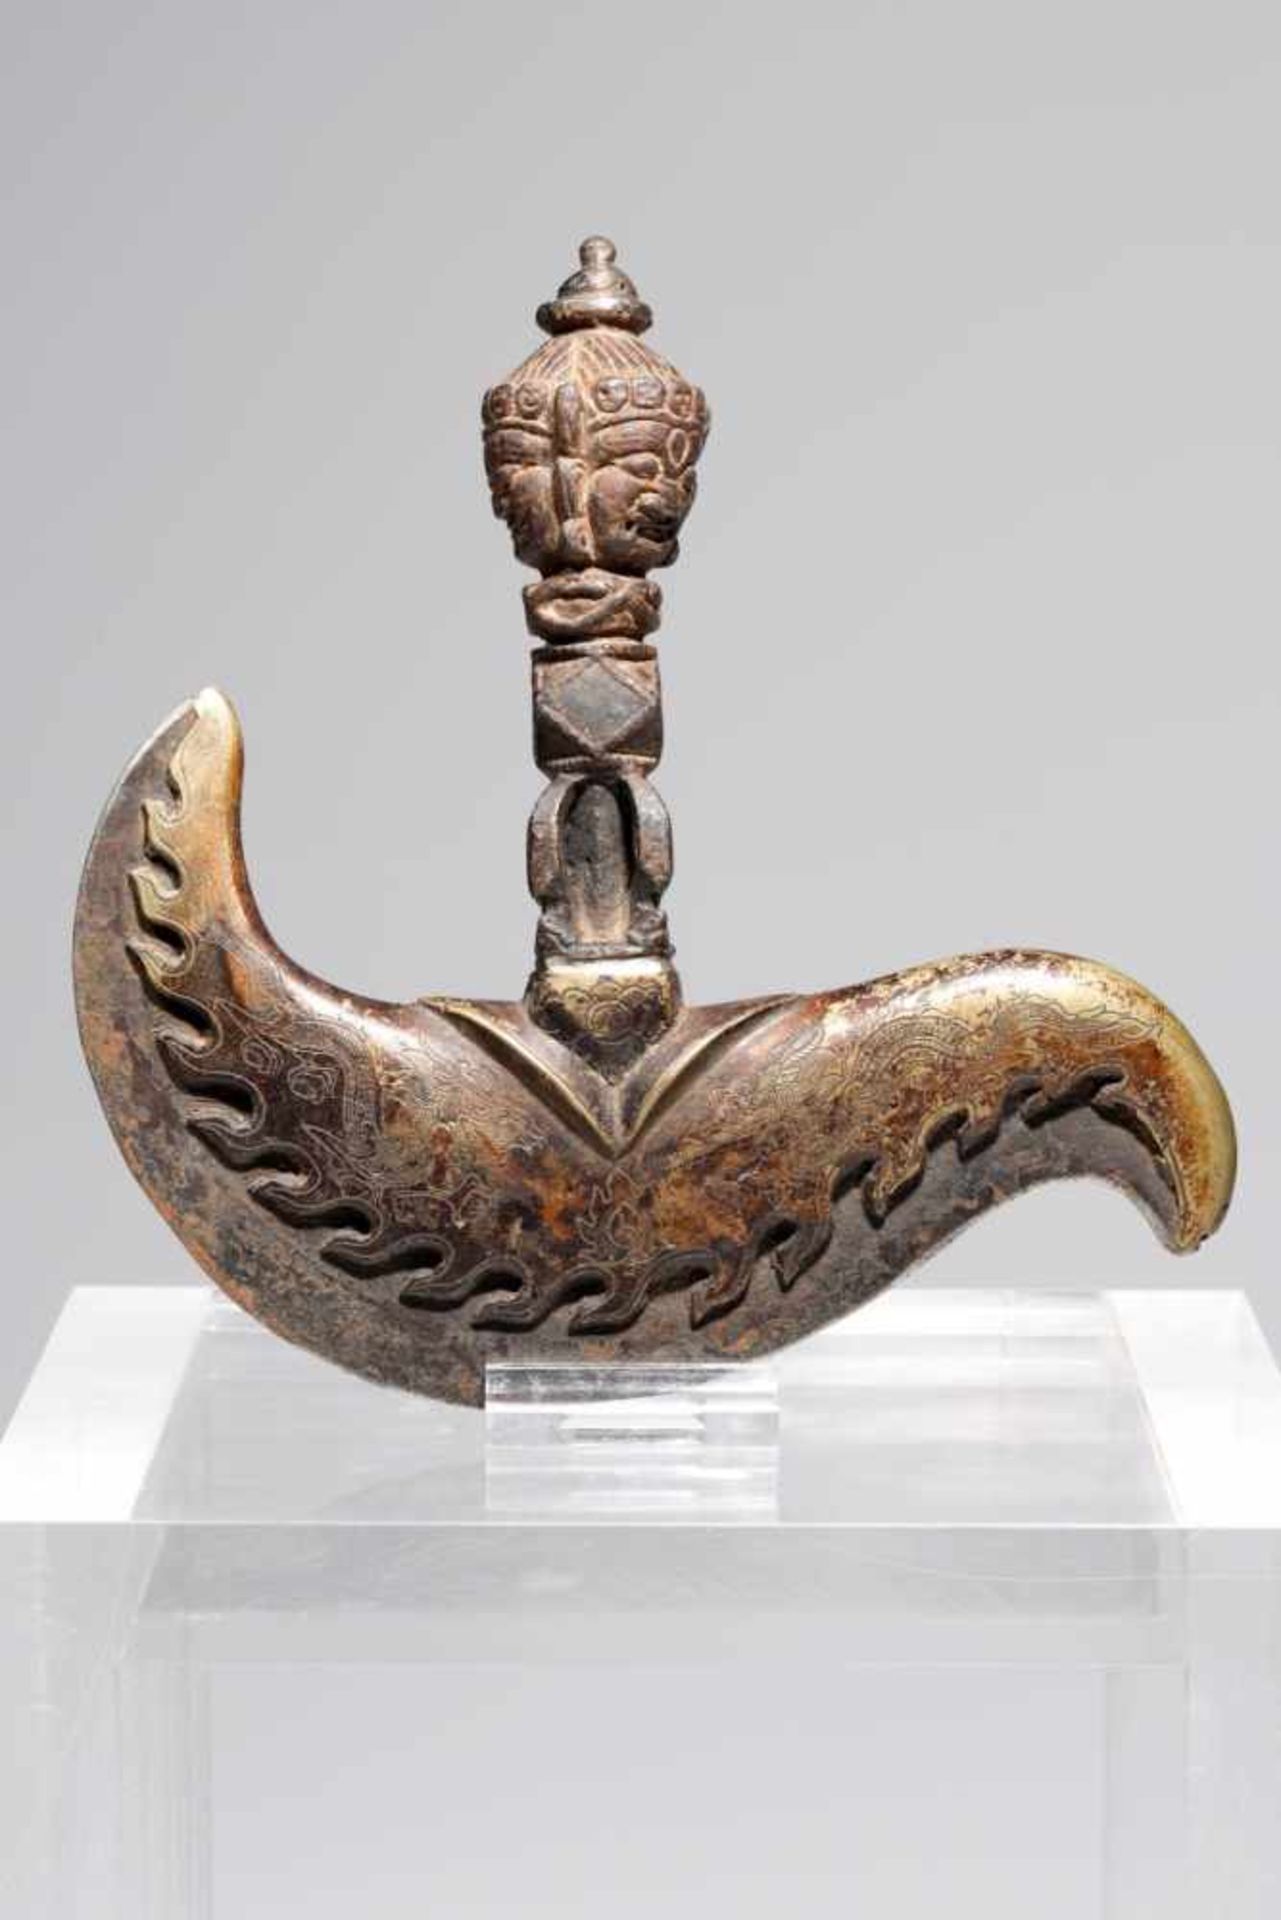 RITUAL CHOPPER (KARTTRKA)bronze and iron,Tibet, 19th century,H: 17 cmThe hooked crescent-shaped iron